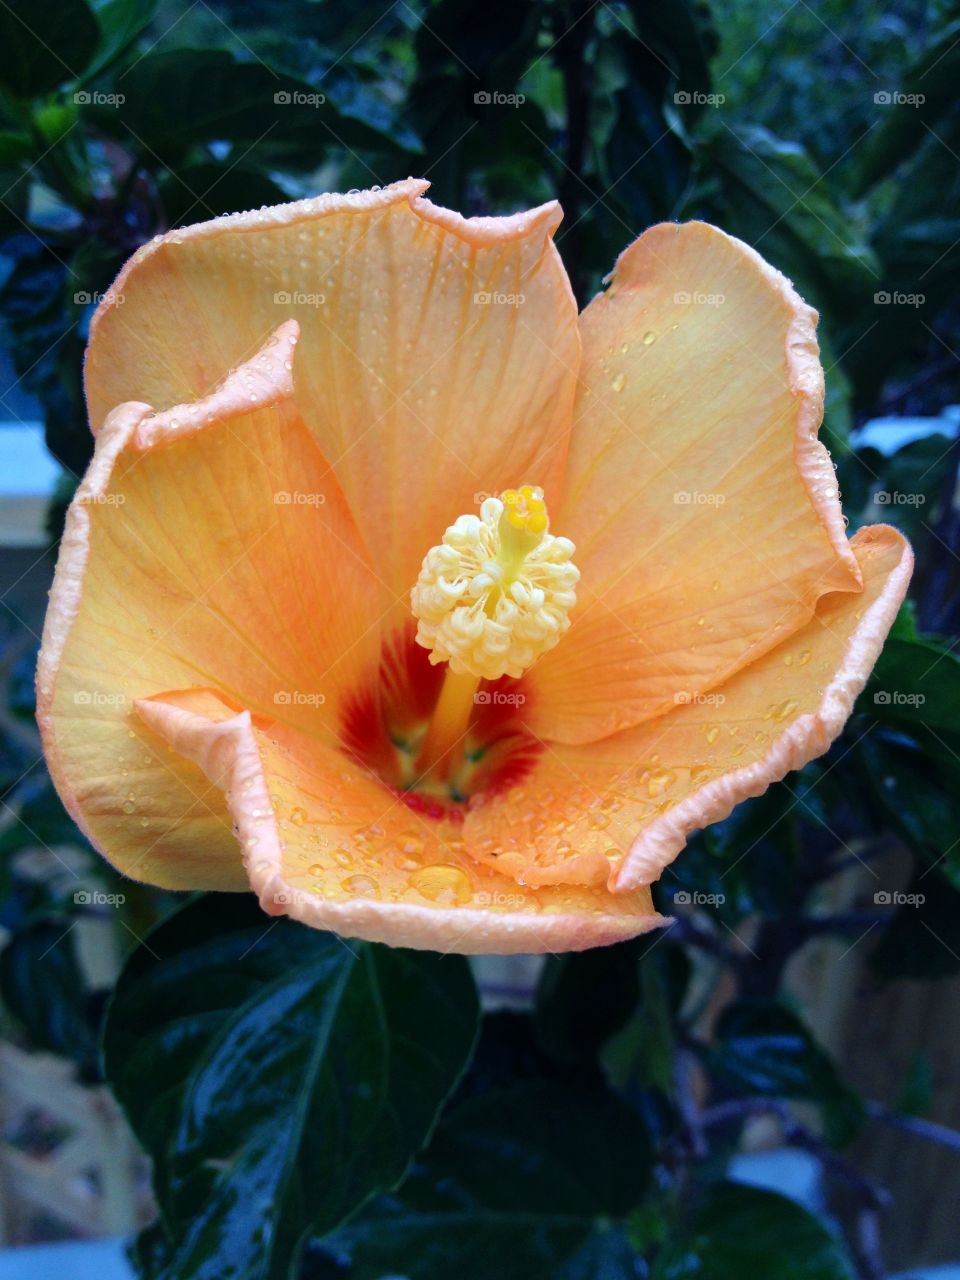 Hibiscus bud opening.